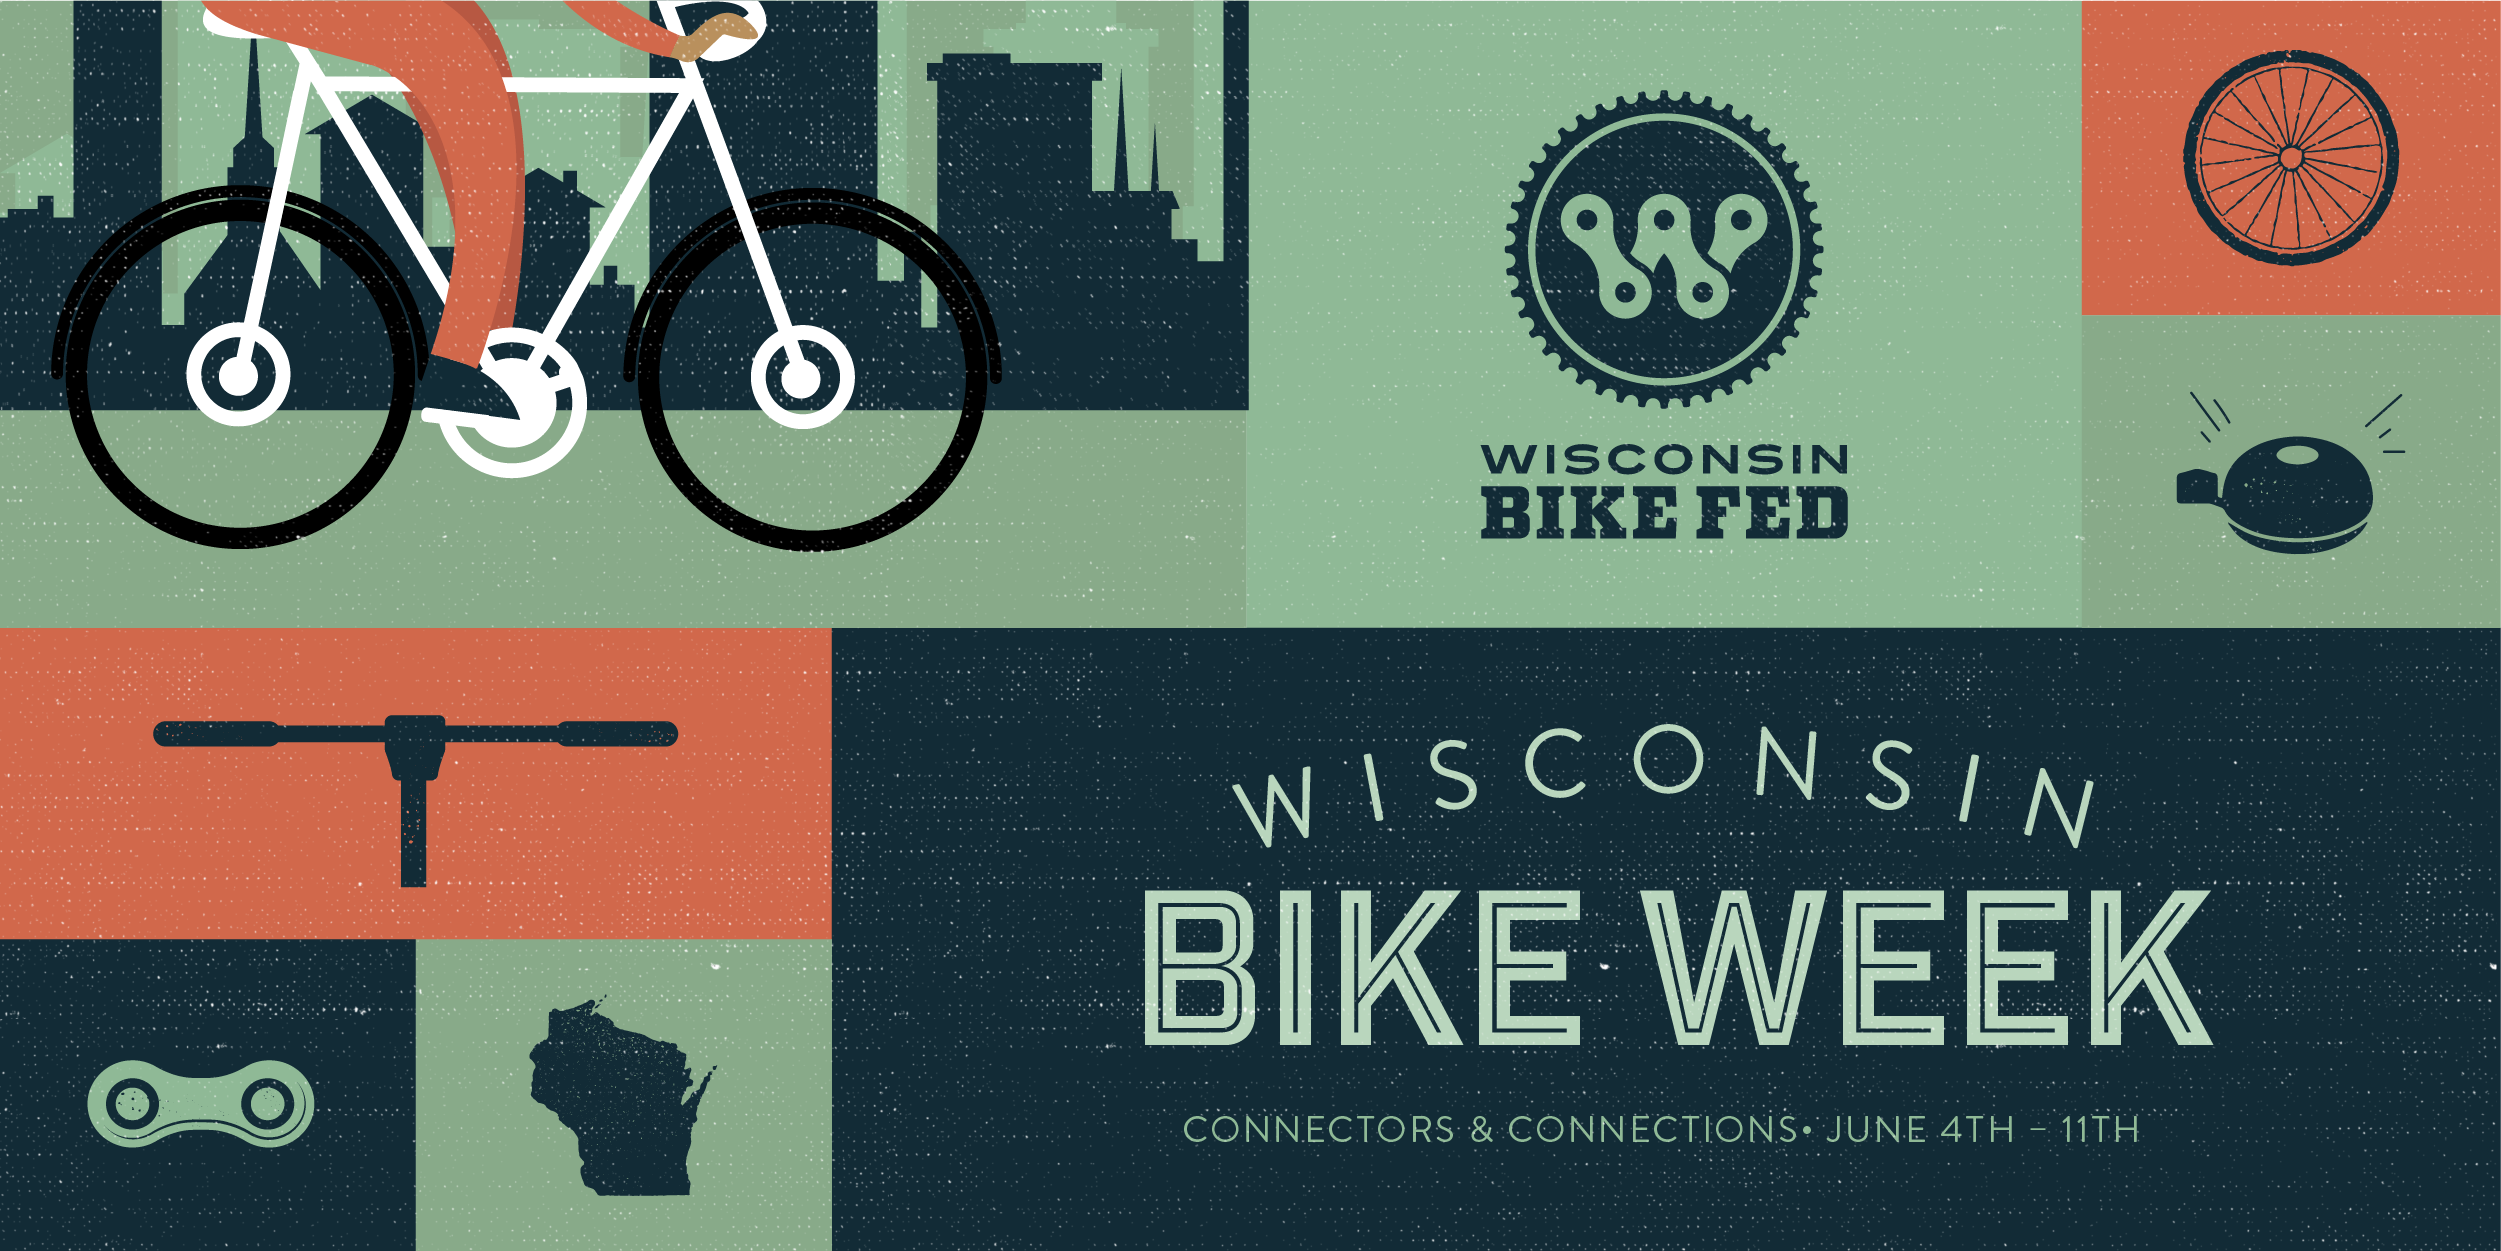 Wisconsin Bike Week Wisconsin Bike Fed